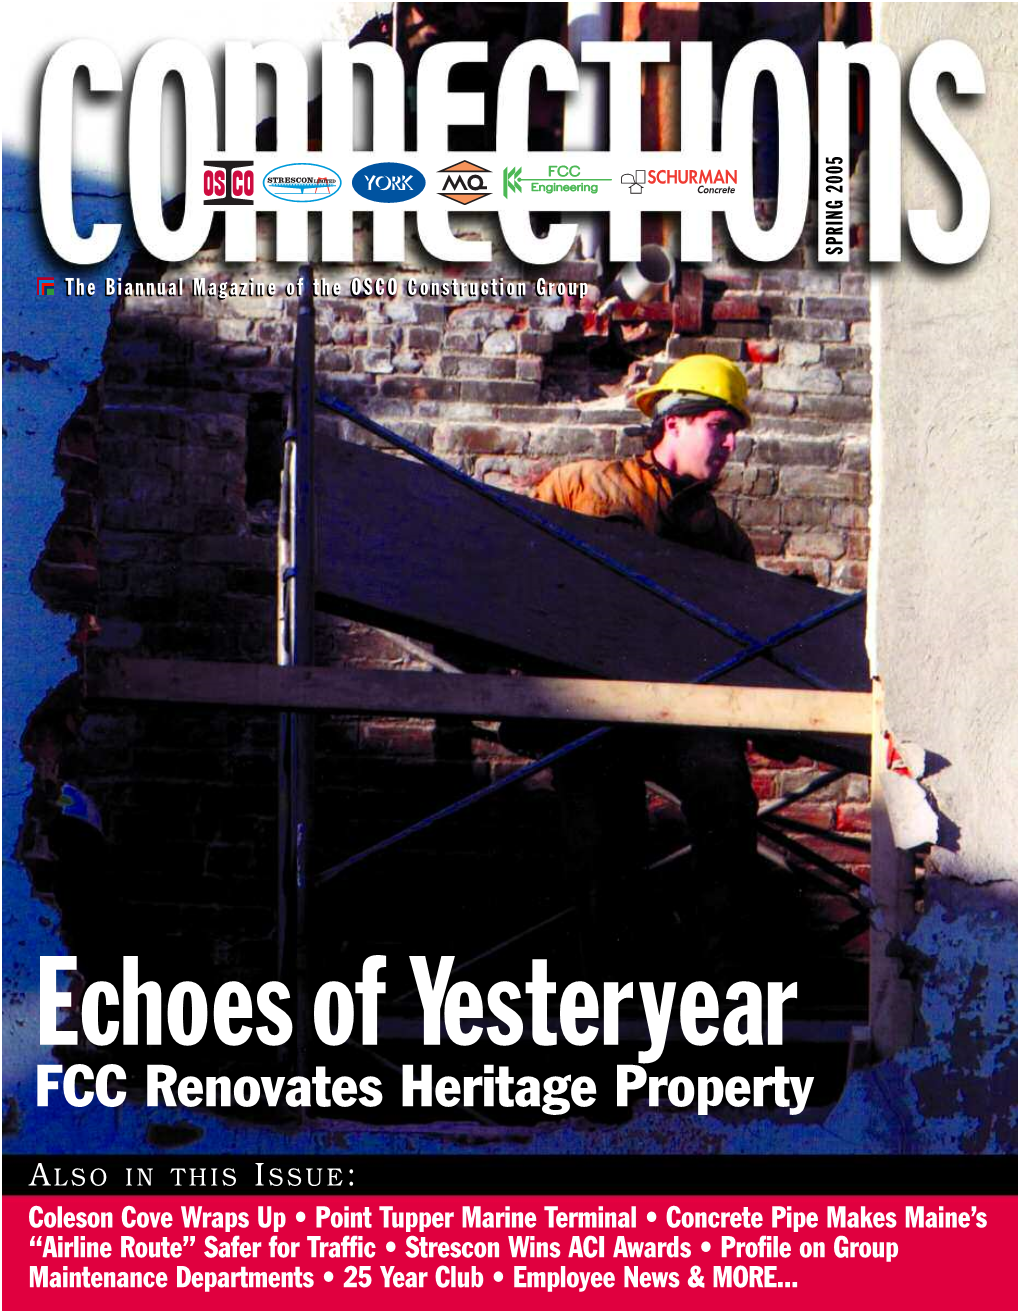 FCC Renovates Heritage Property